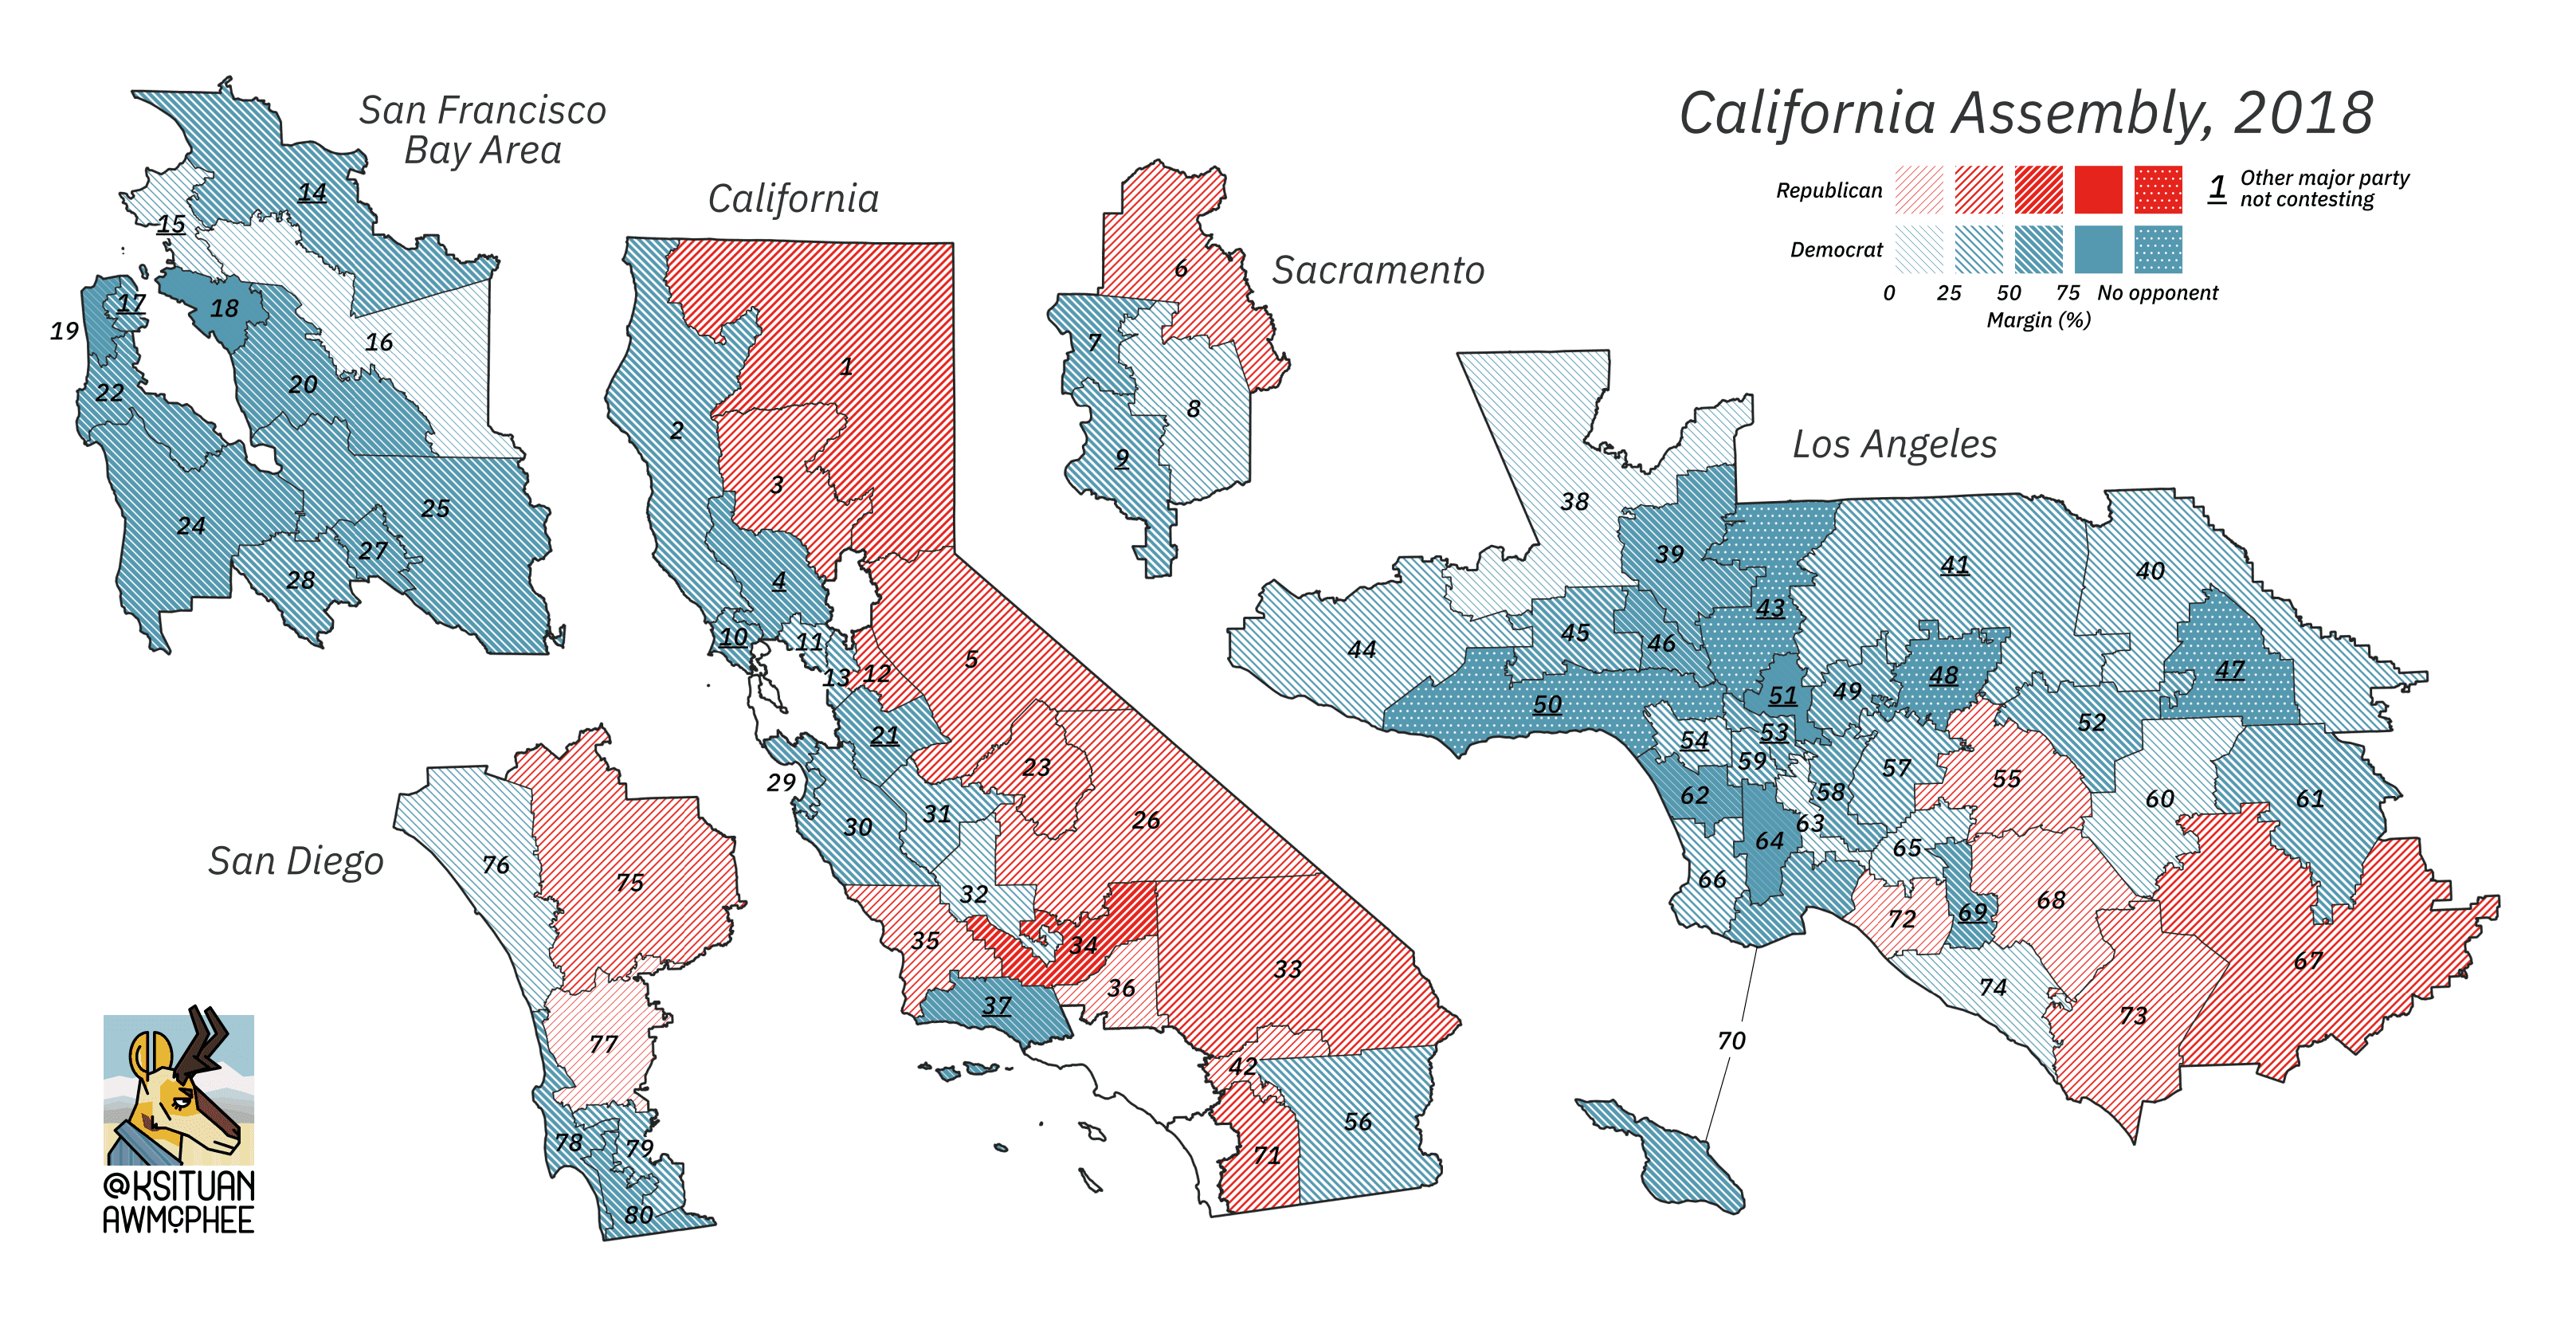 A political map of California.